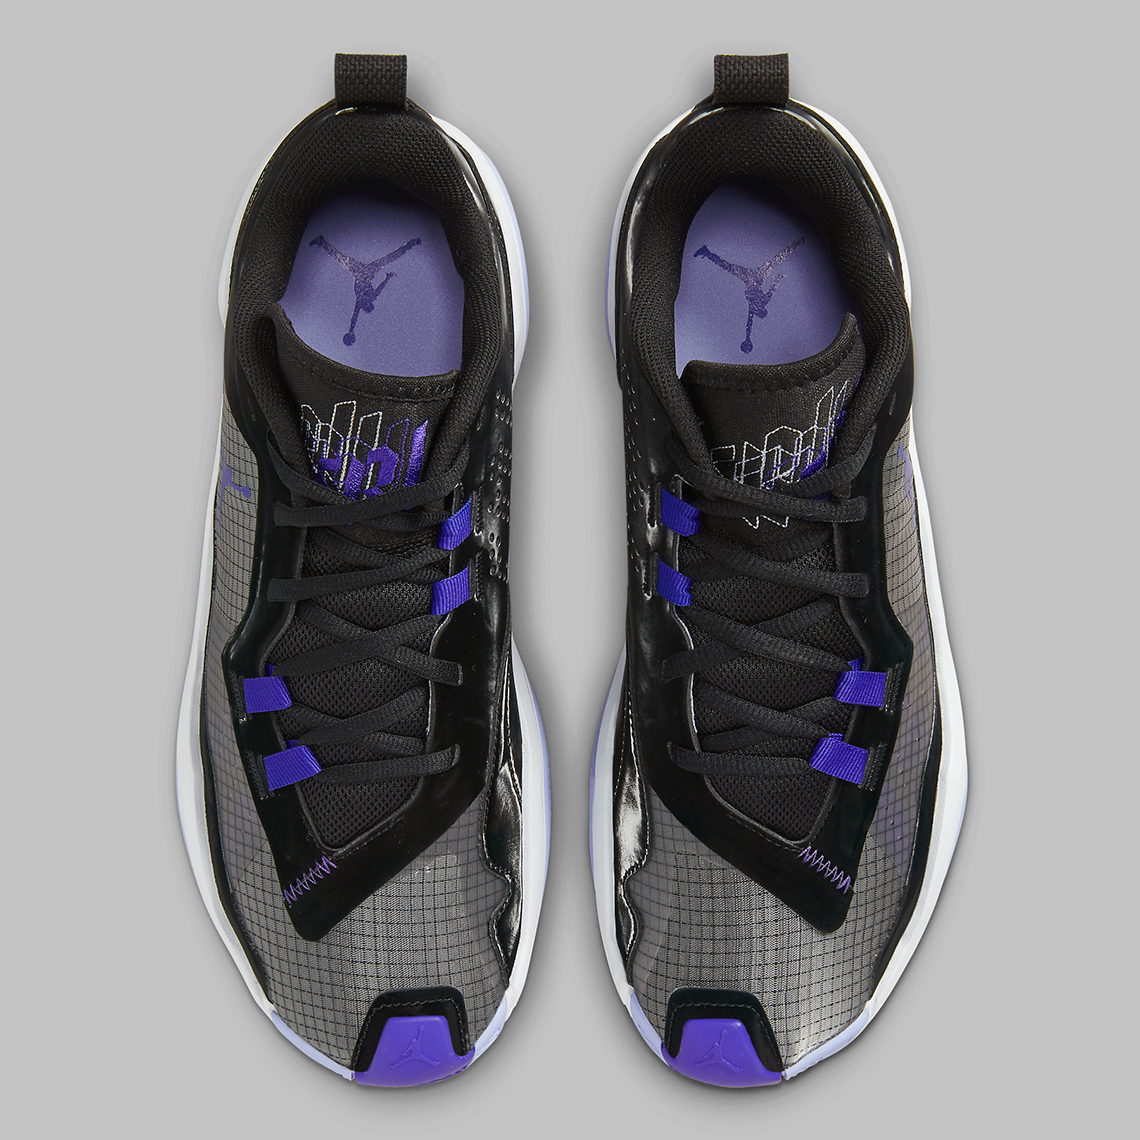 Pack Jordan Wristbands Grey Black Purple Do7193 051 2